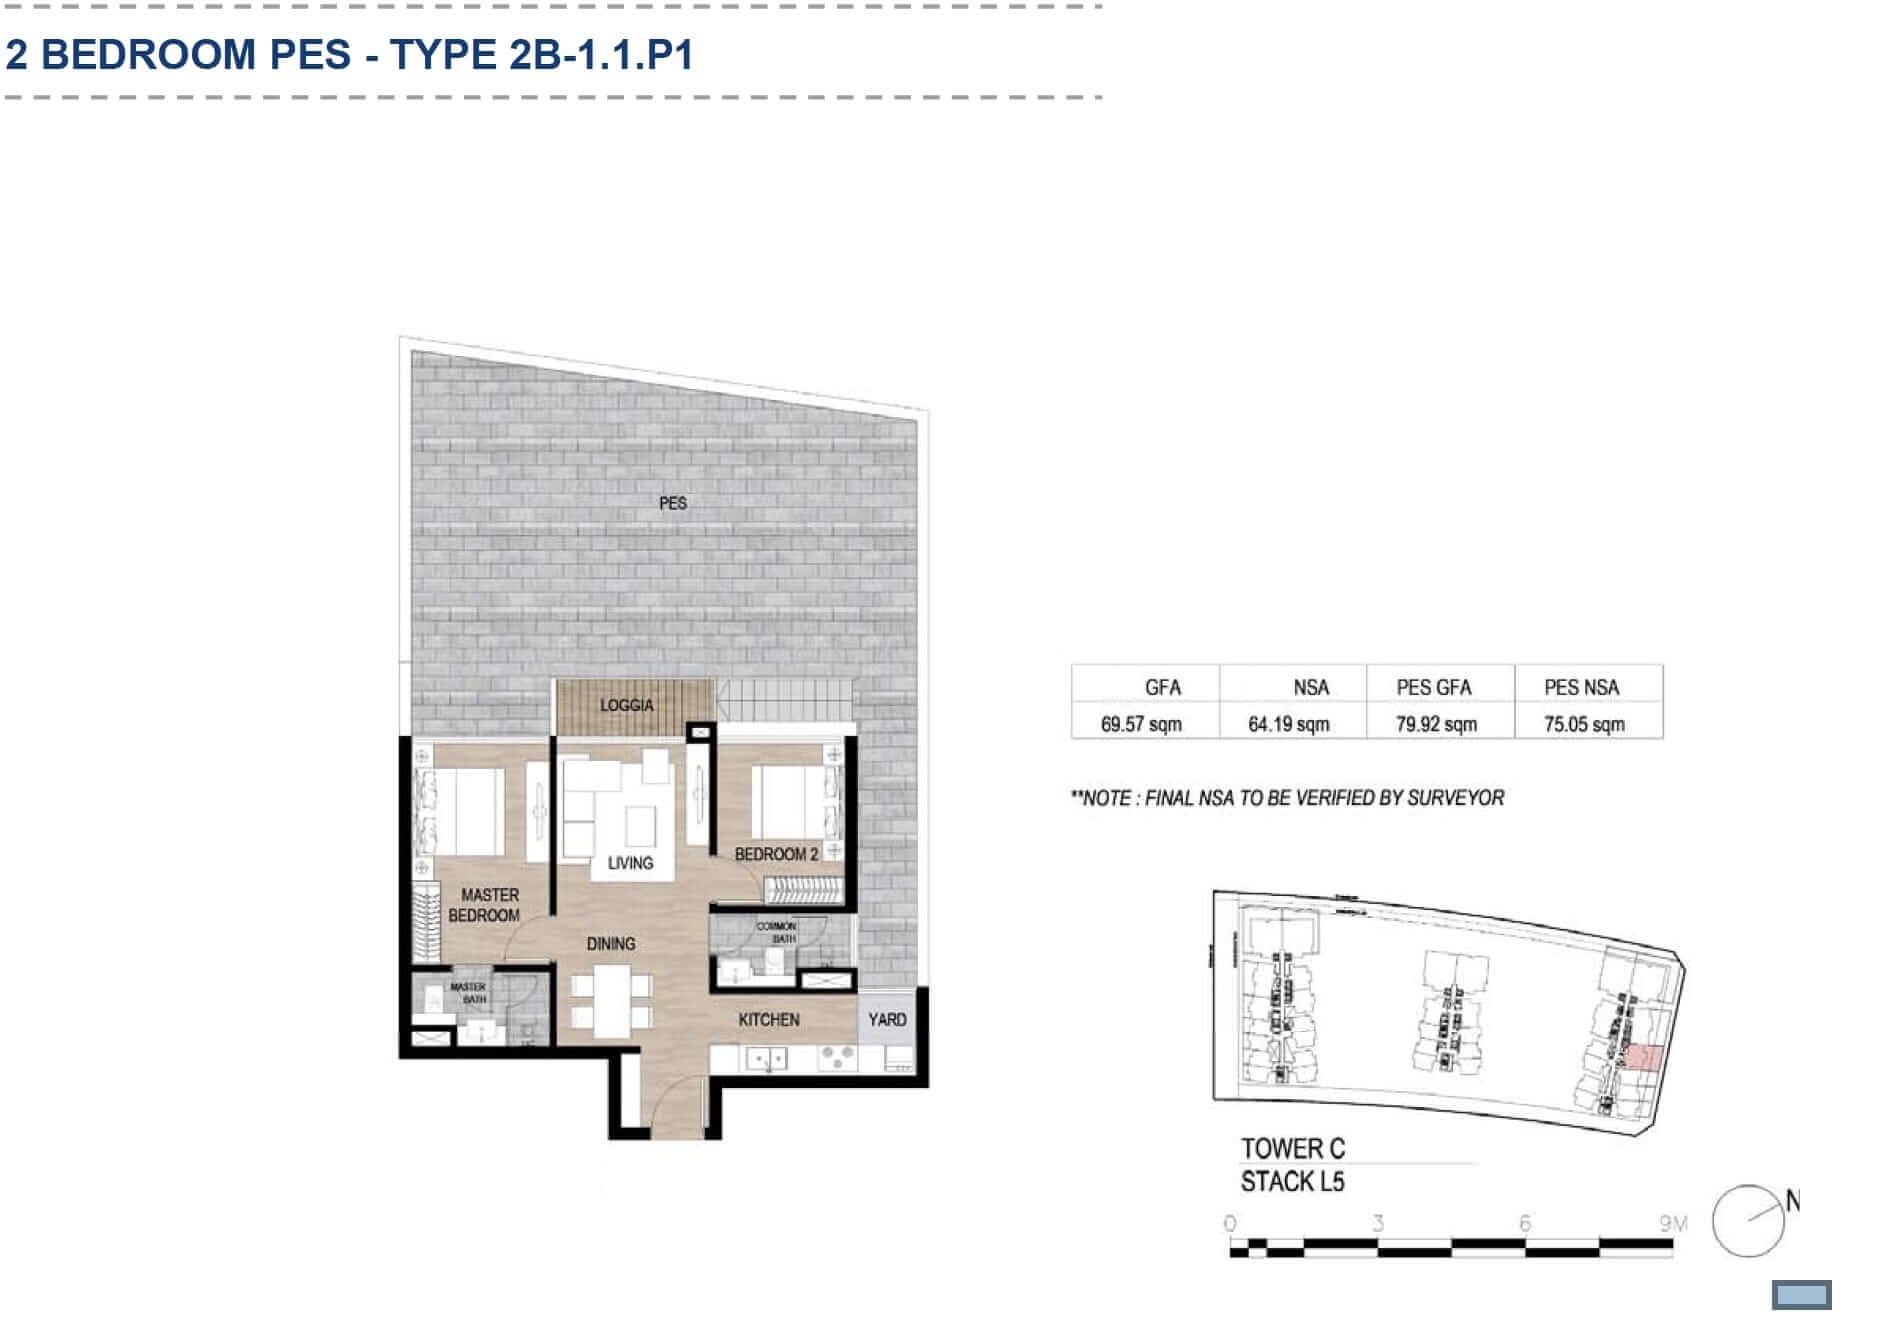 Floor plan of Metropole Thu Thiem garden apartment in District 2 2